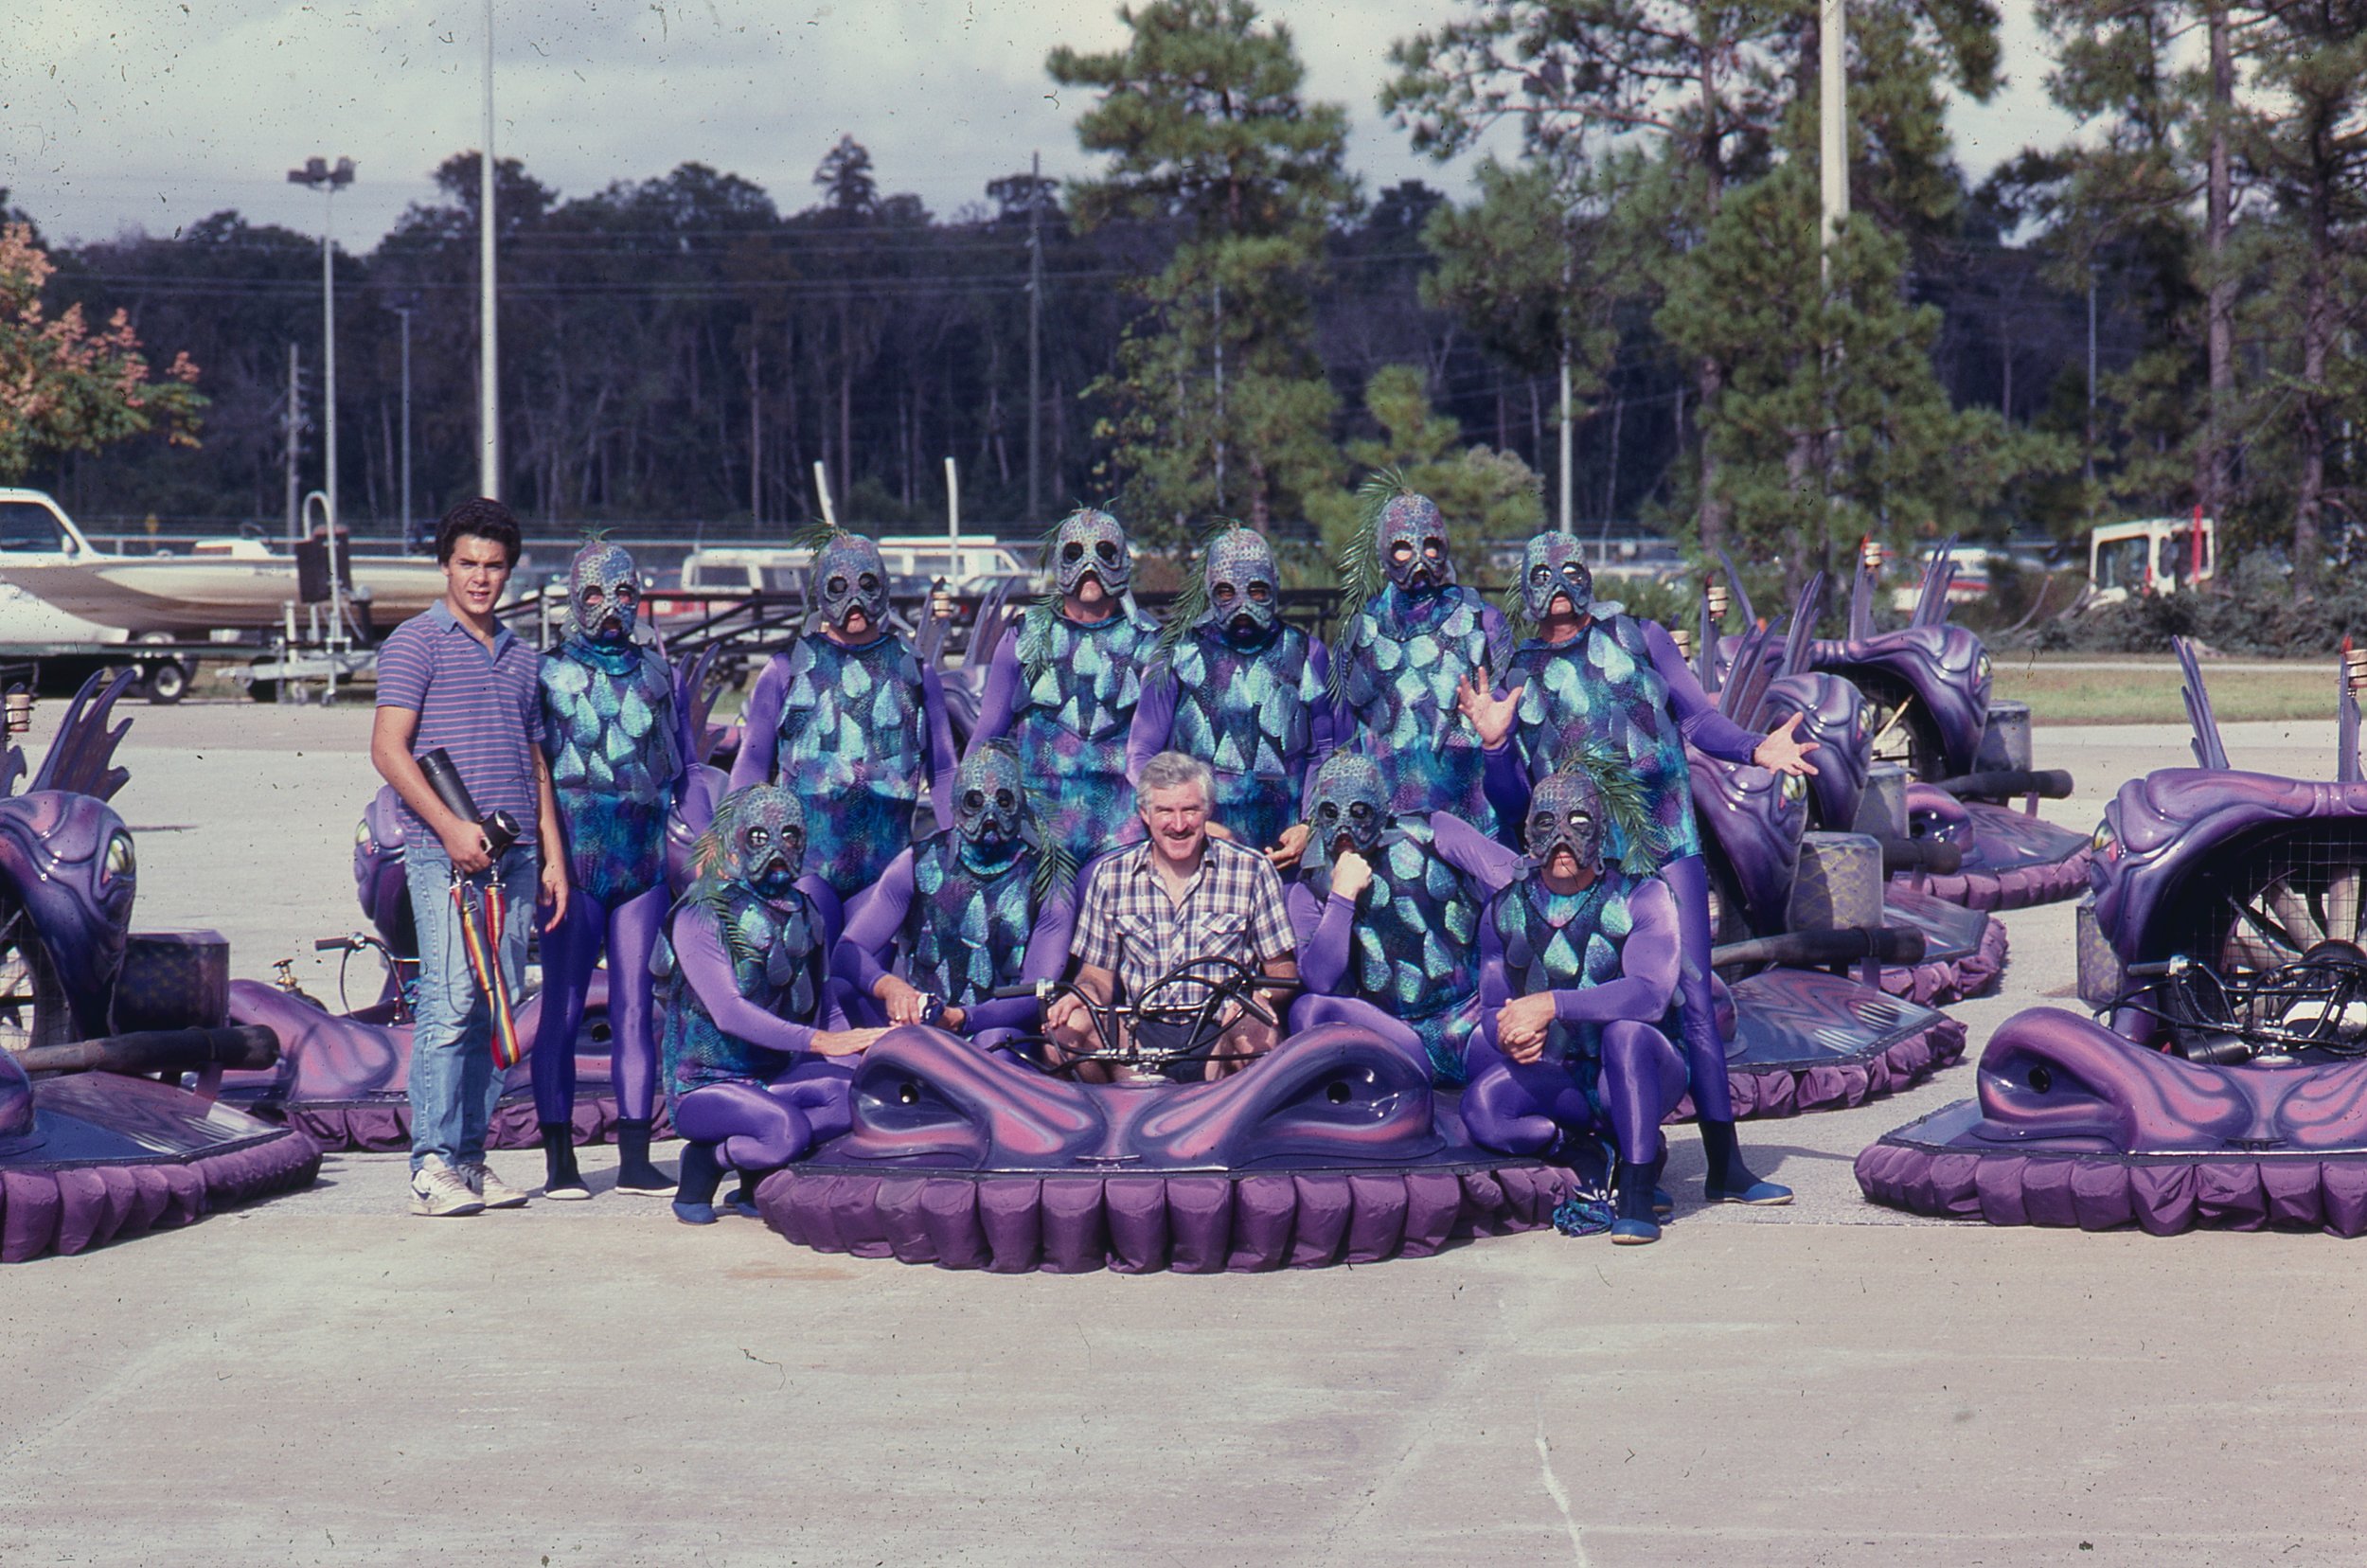  Fleet of Neoteric craft flown by Human Lizards at Disney’s Orlando Epcot Center 